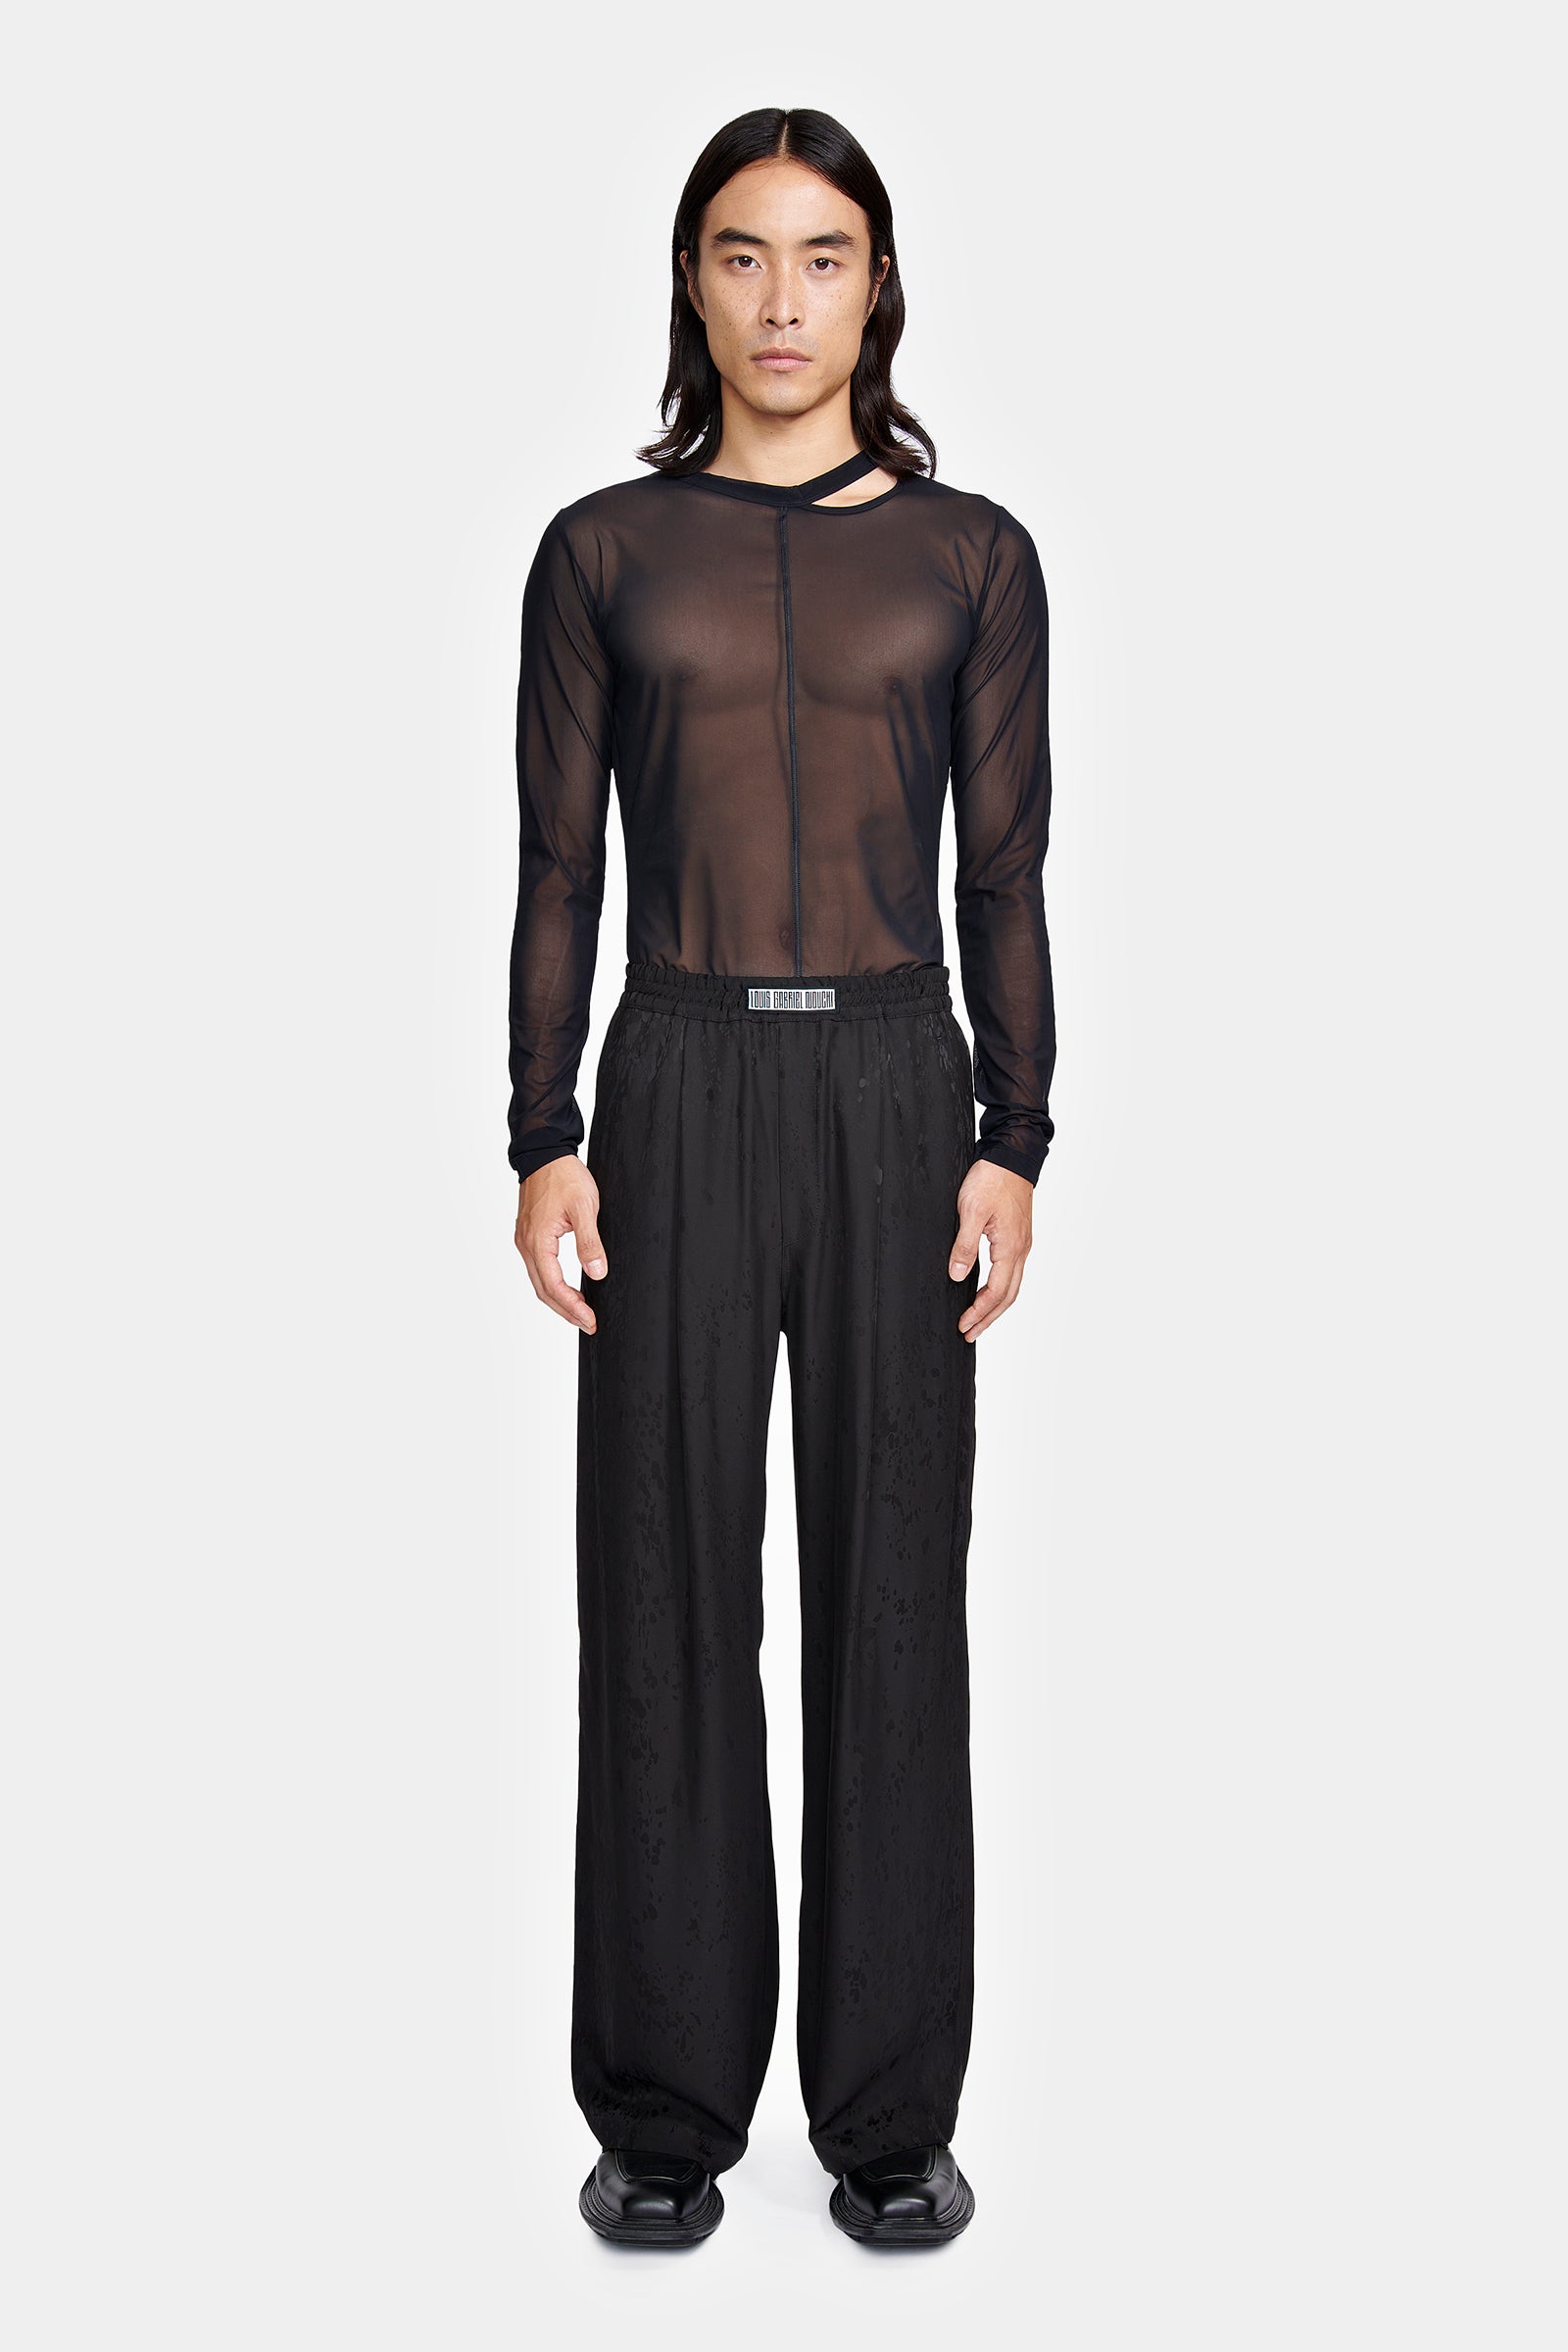 Louis Vuitton Mesh Shorts Black Men's - SS22 - US